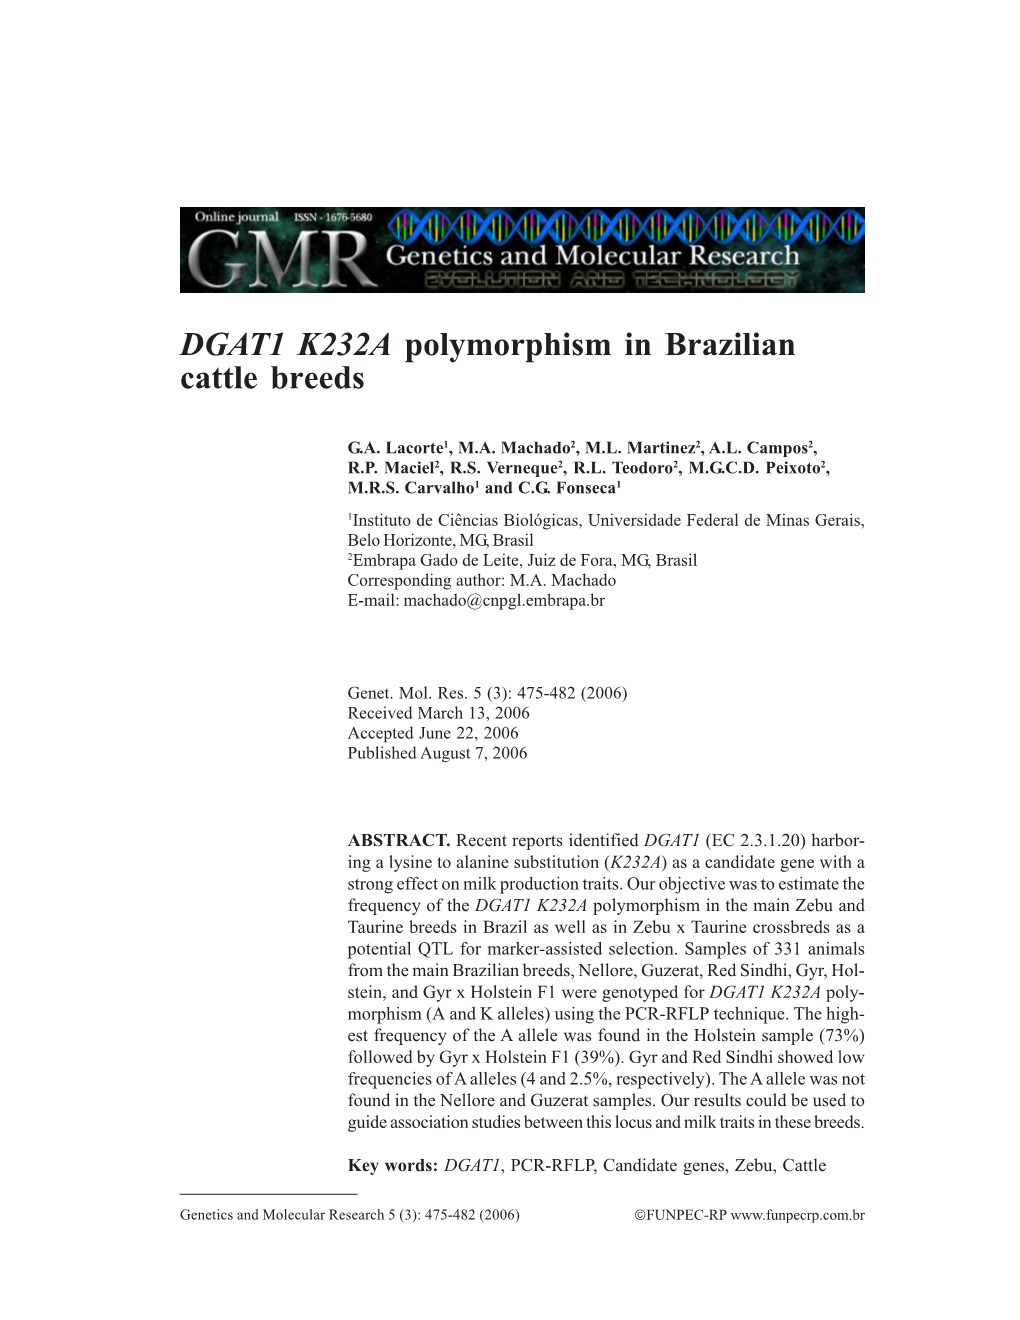 DGAT1 K232A Polymorphism in Brazilian Cattle Breeds 475